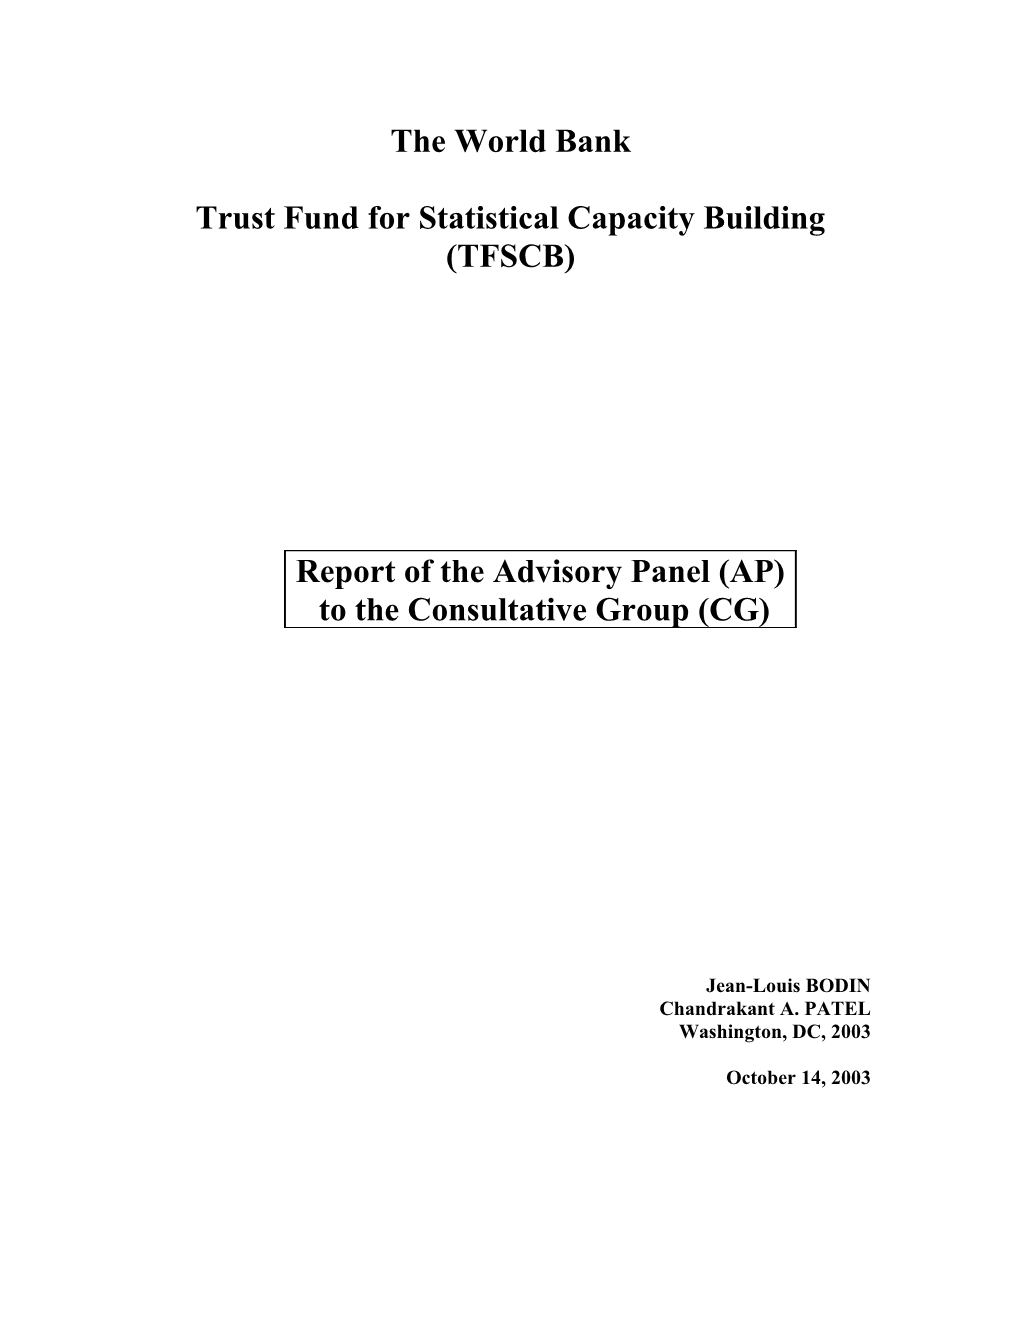 Advisory Panel Report - US Format